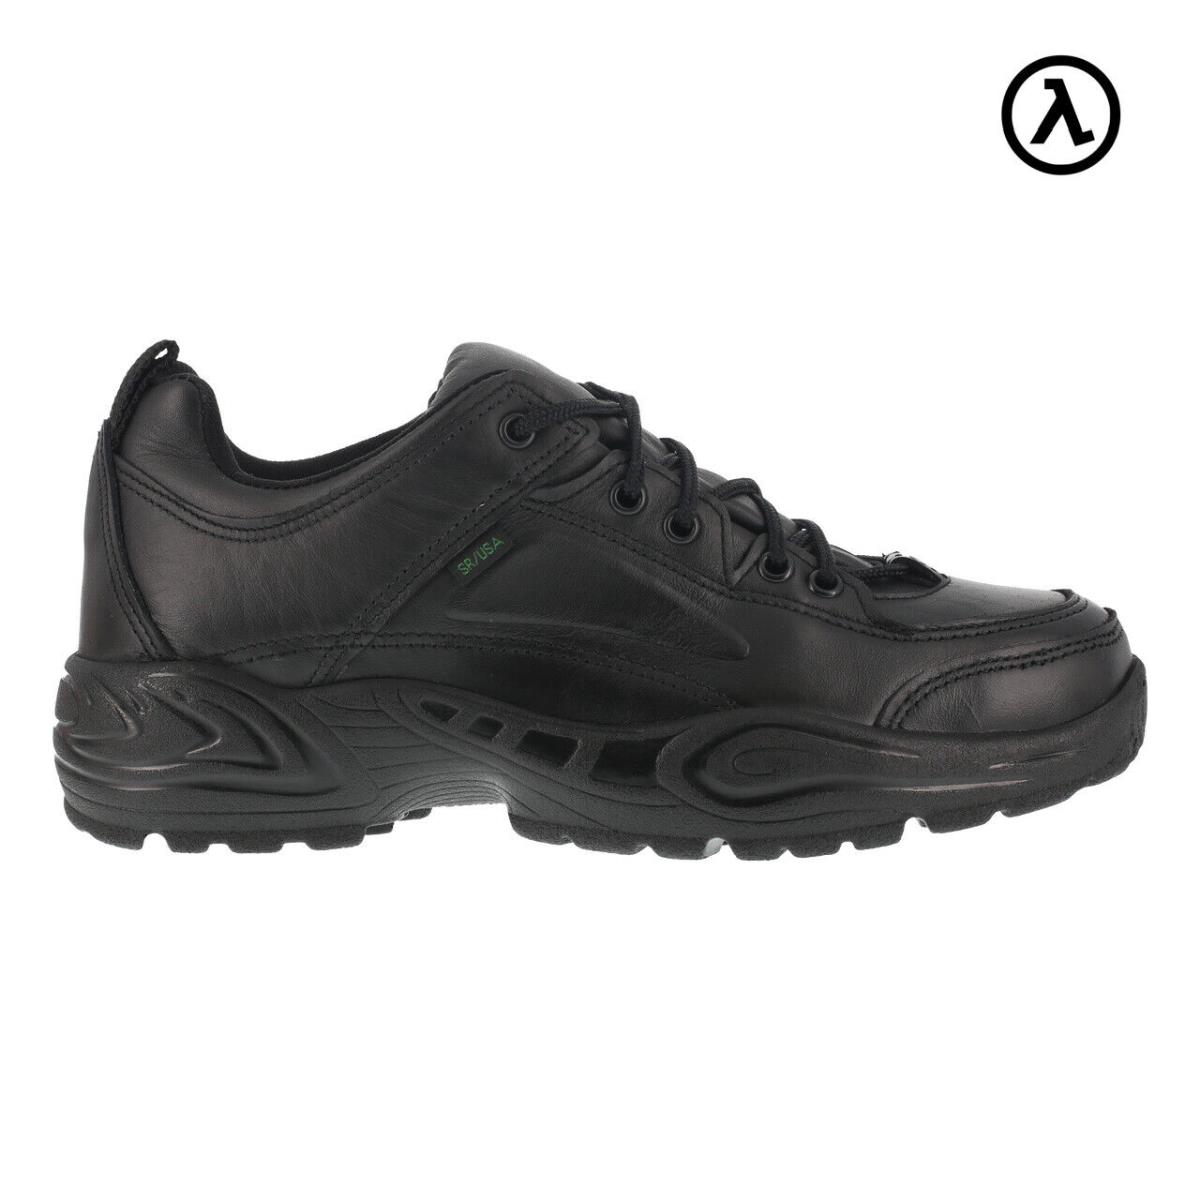 Reebok Postal Express Men`s Waterproof Postal Shoe Black Boots CP8115 - All Size